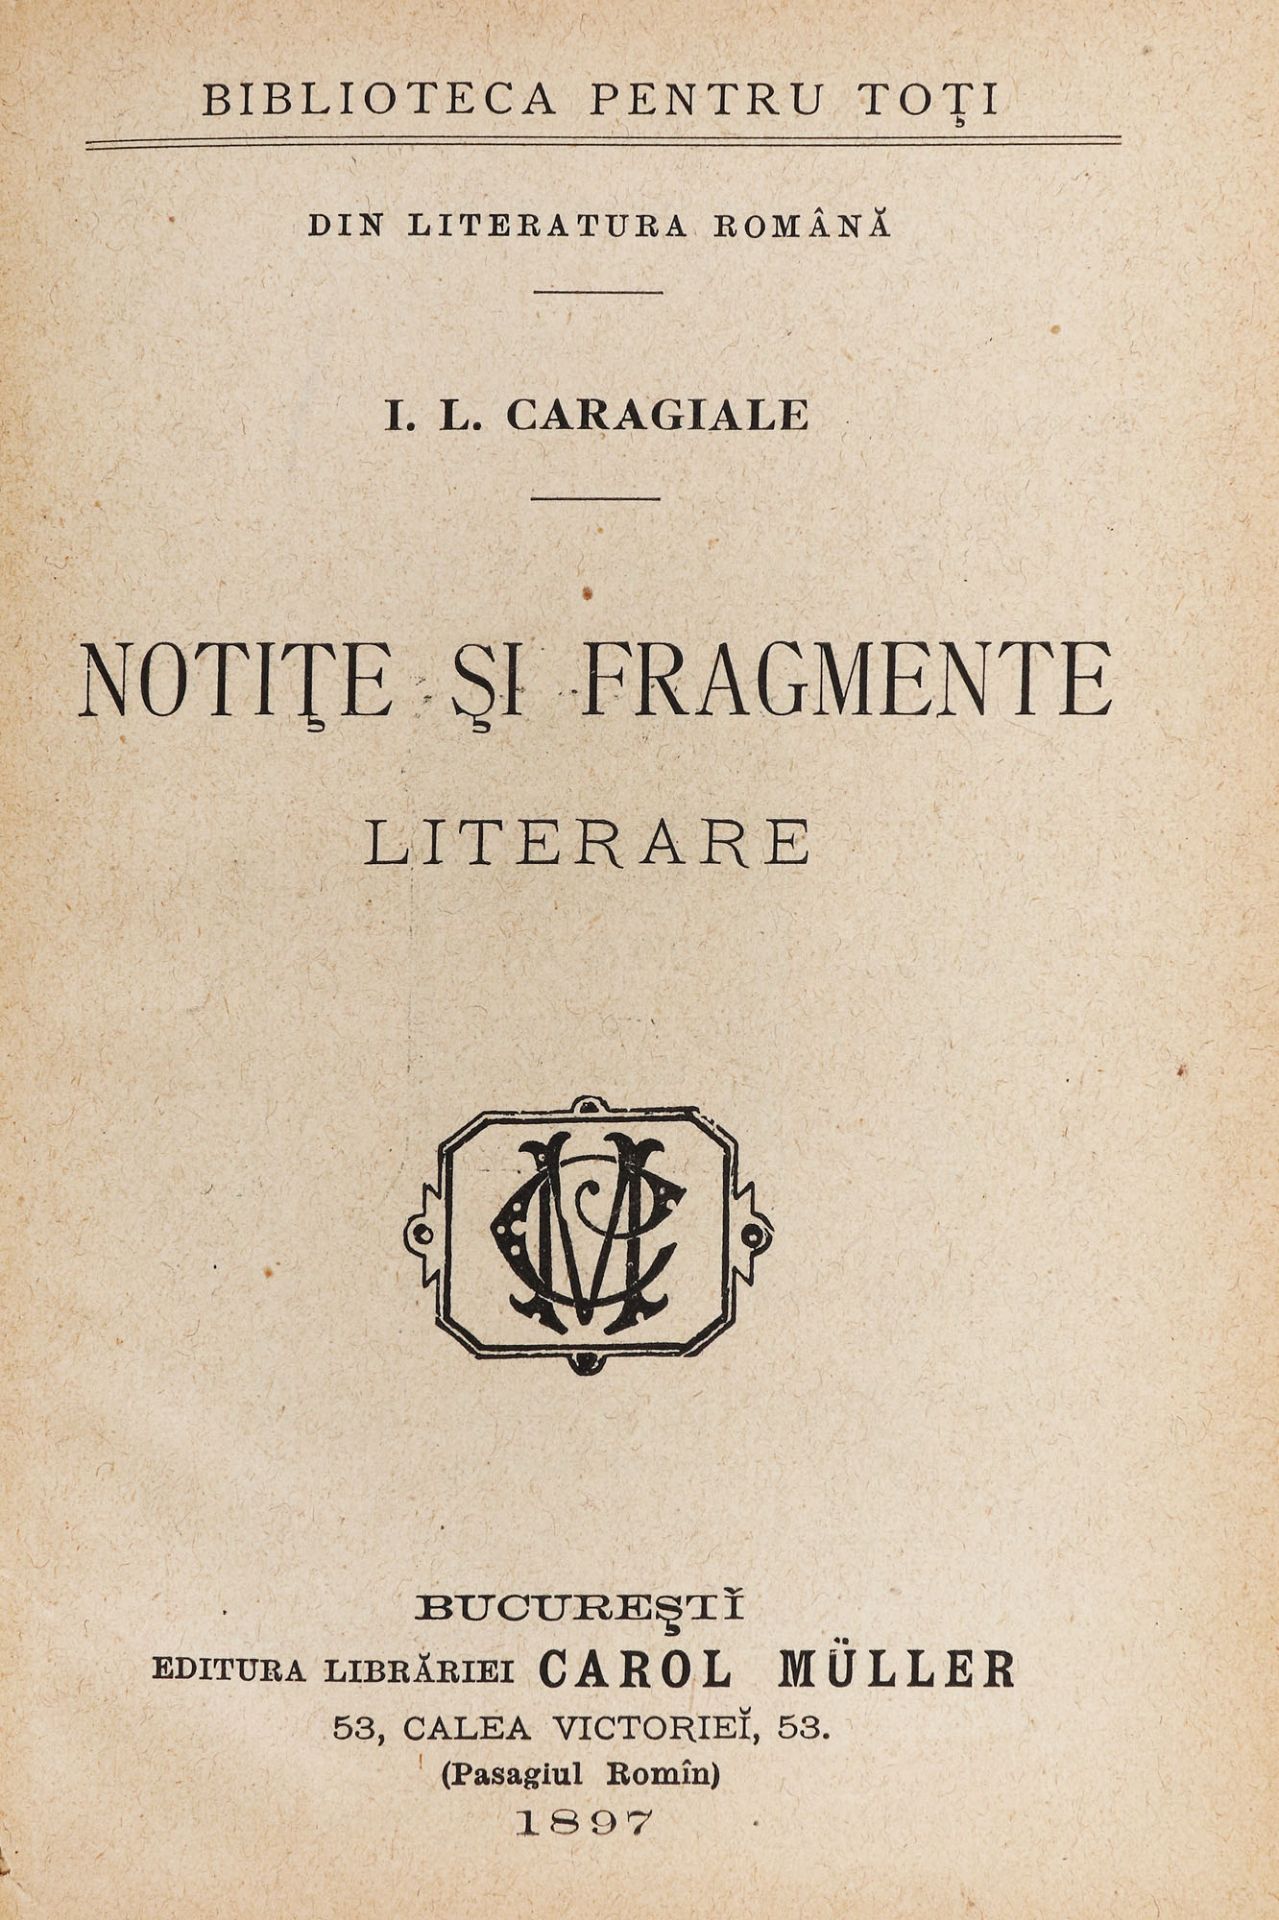 "Noti?e ?i fragmente literare", by Ion Luca Caragiale, editio princeps, Bucharest, 1897 - Image 2 of 4